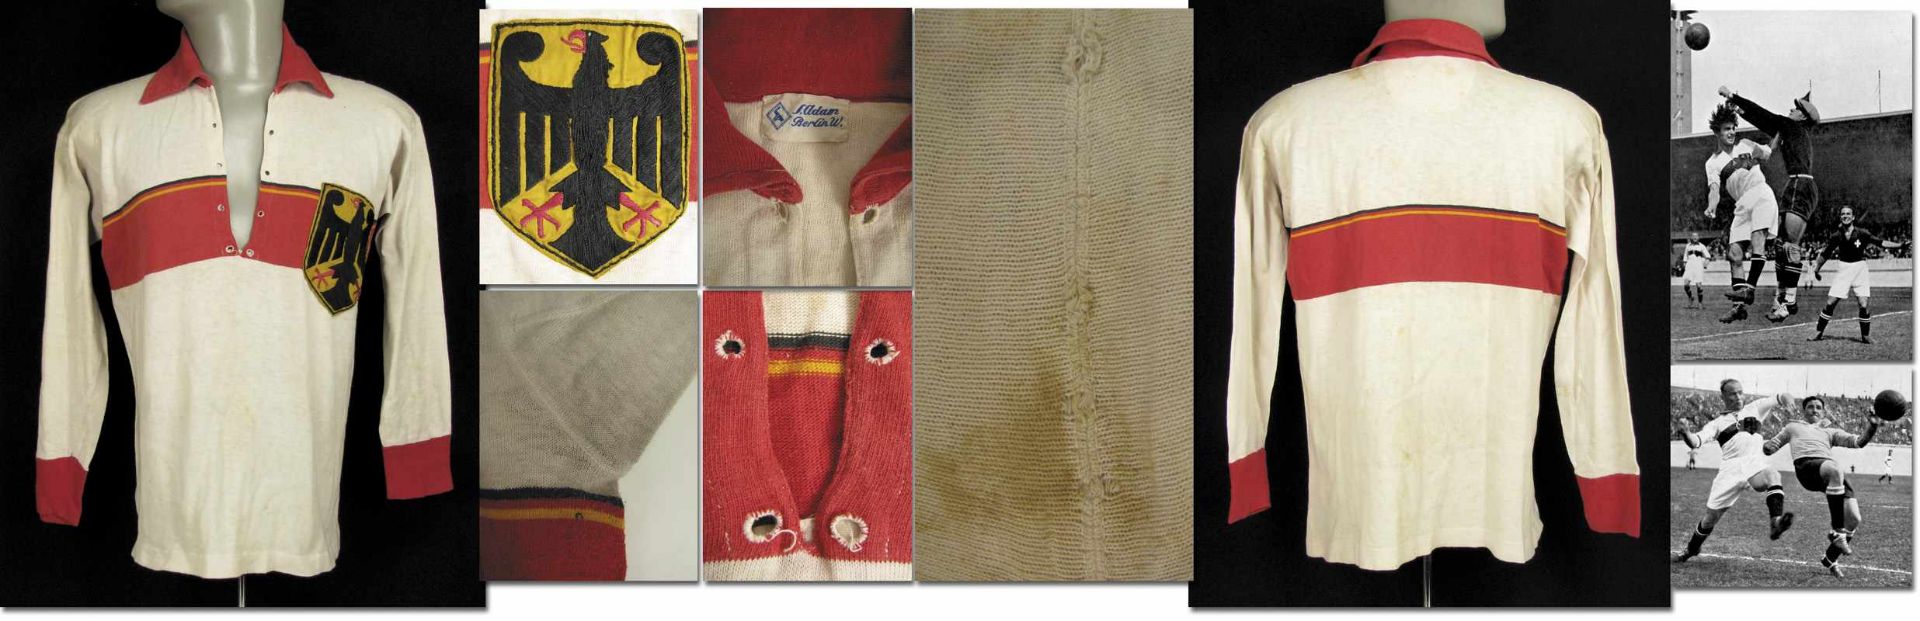 Match worn football shirt Germany 1928 Olympic - Original match worn shirt Germany which was worn in